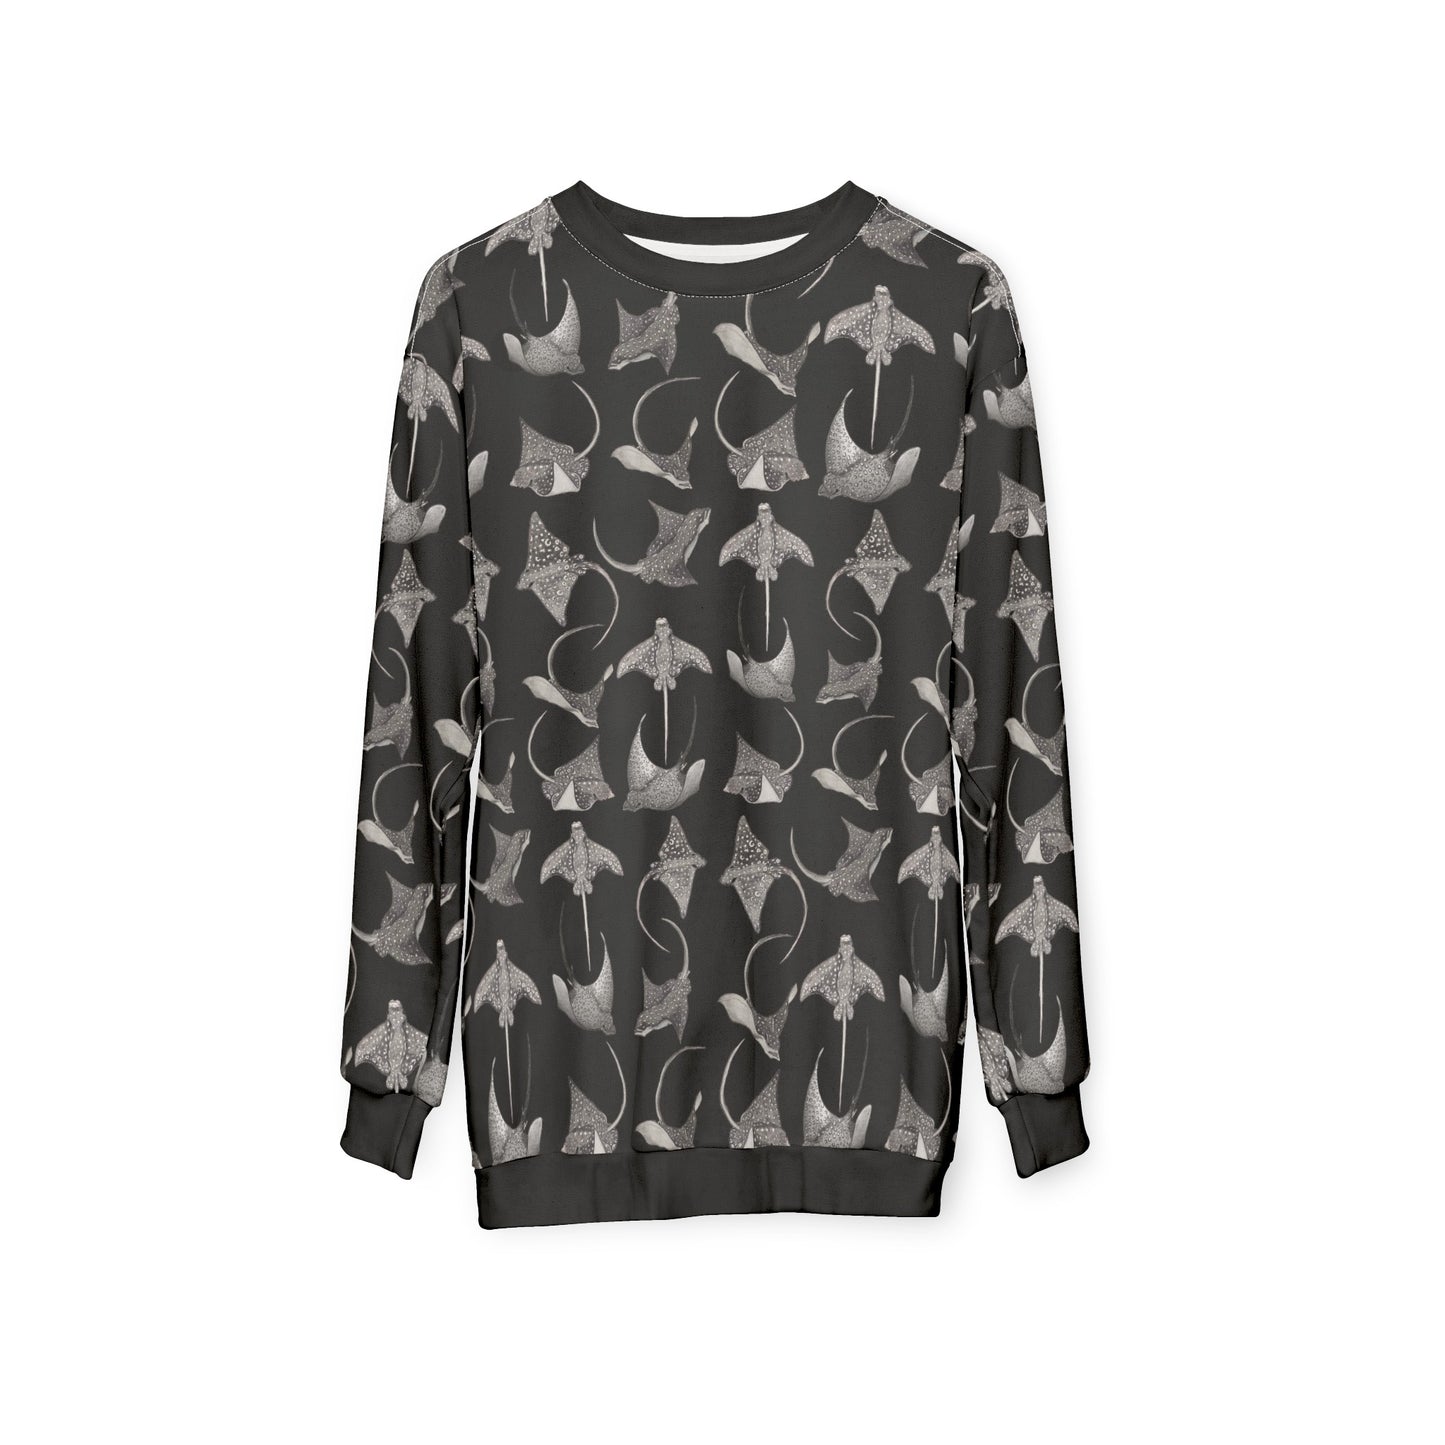 Eagle Ray - Unisex Sweatshirt Limited Edition - Black